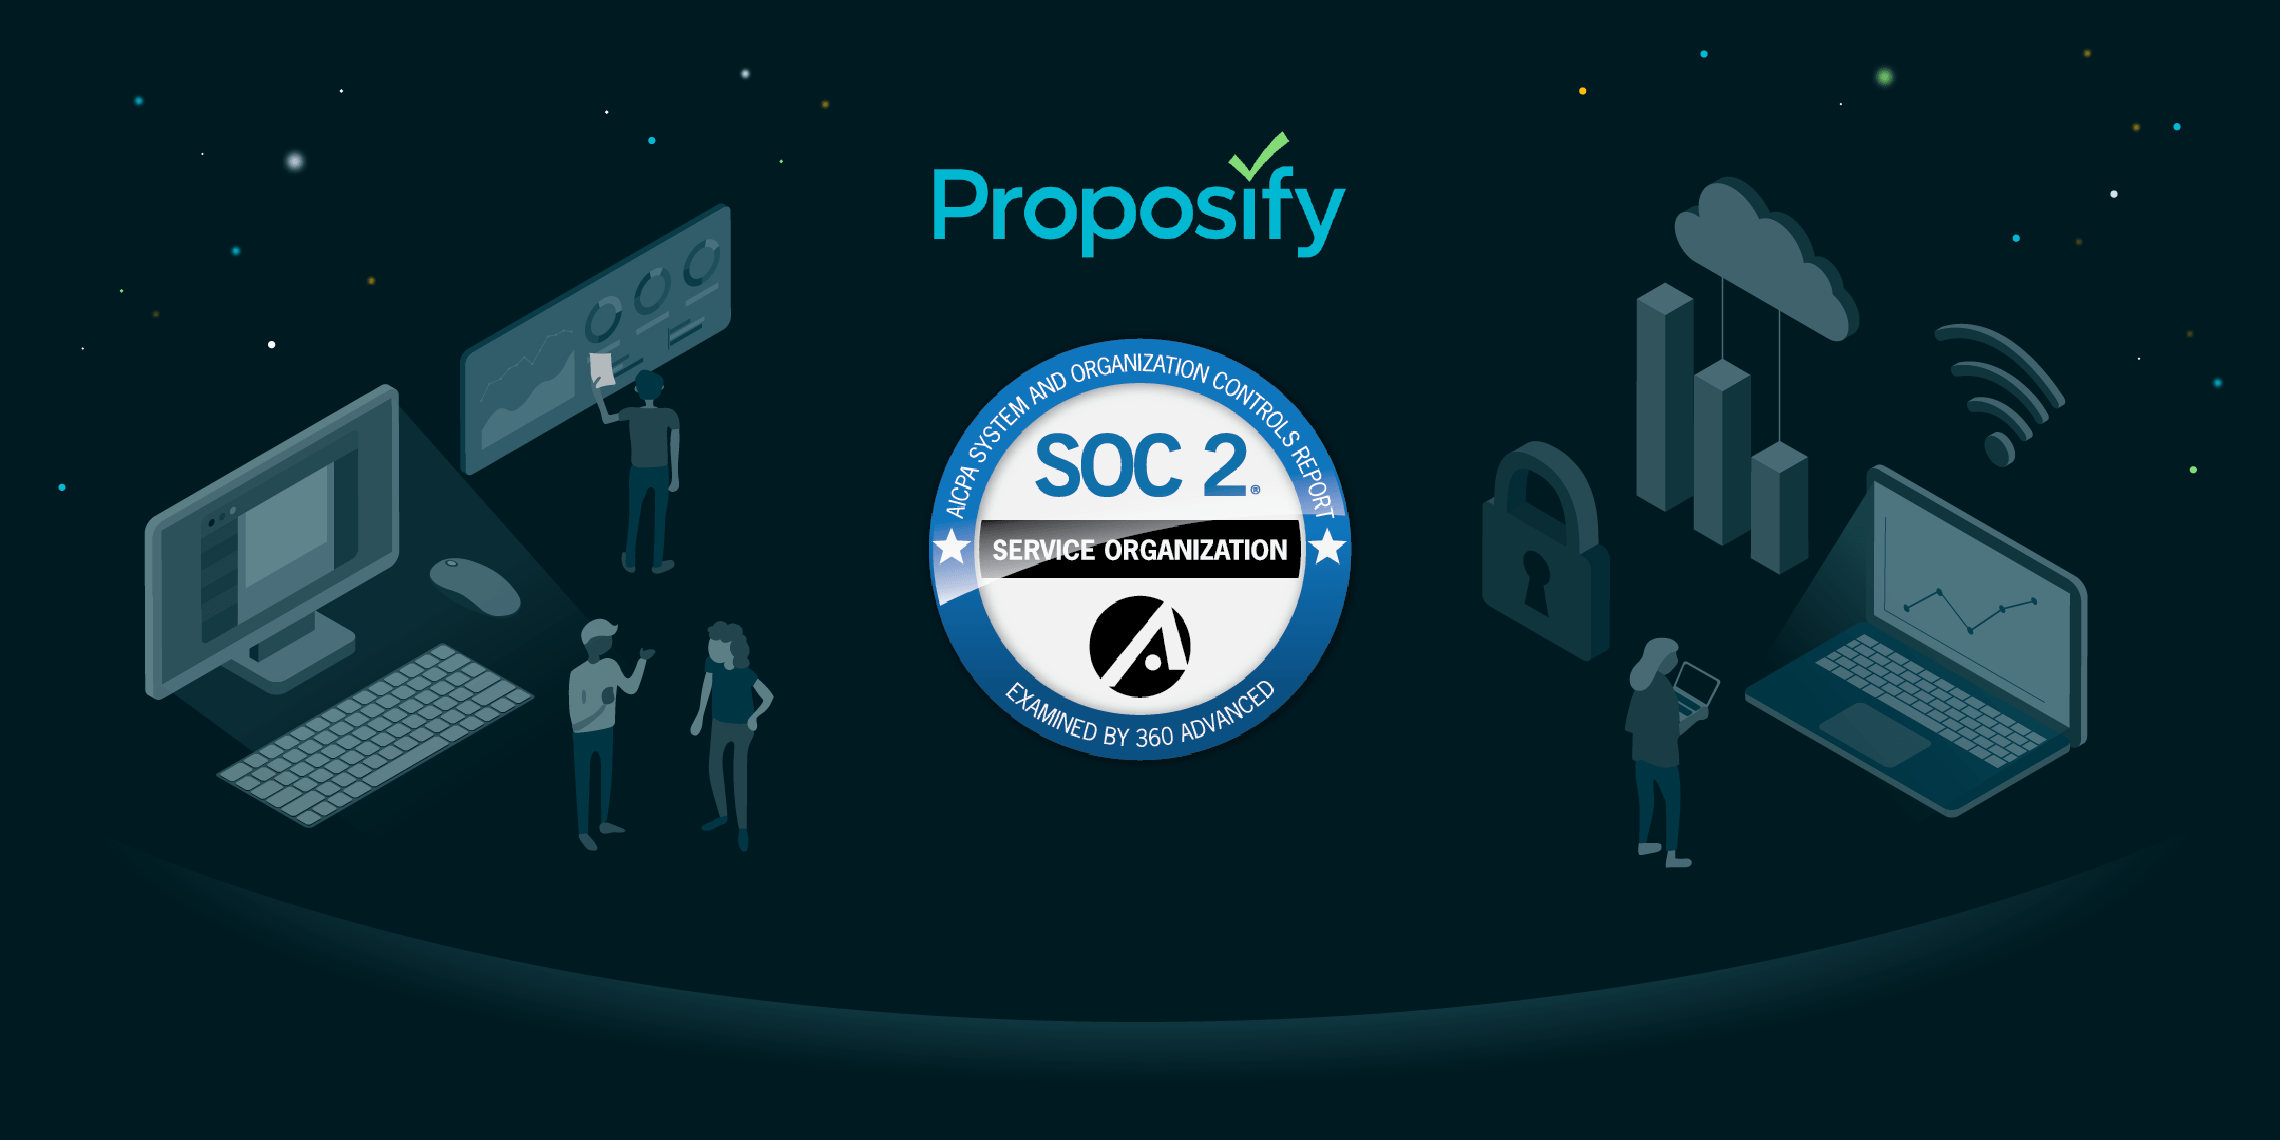 proposify's soc2 compliance announcement